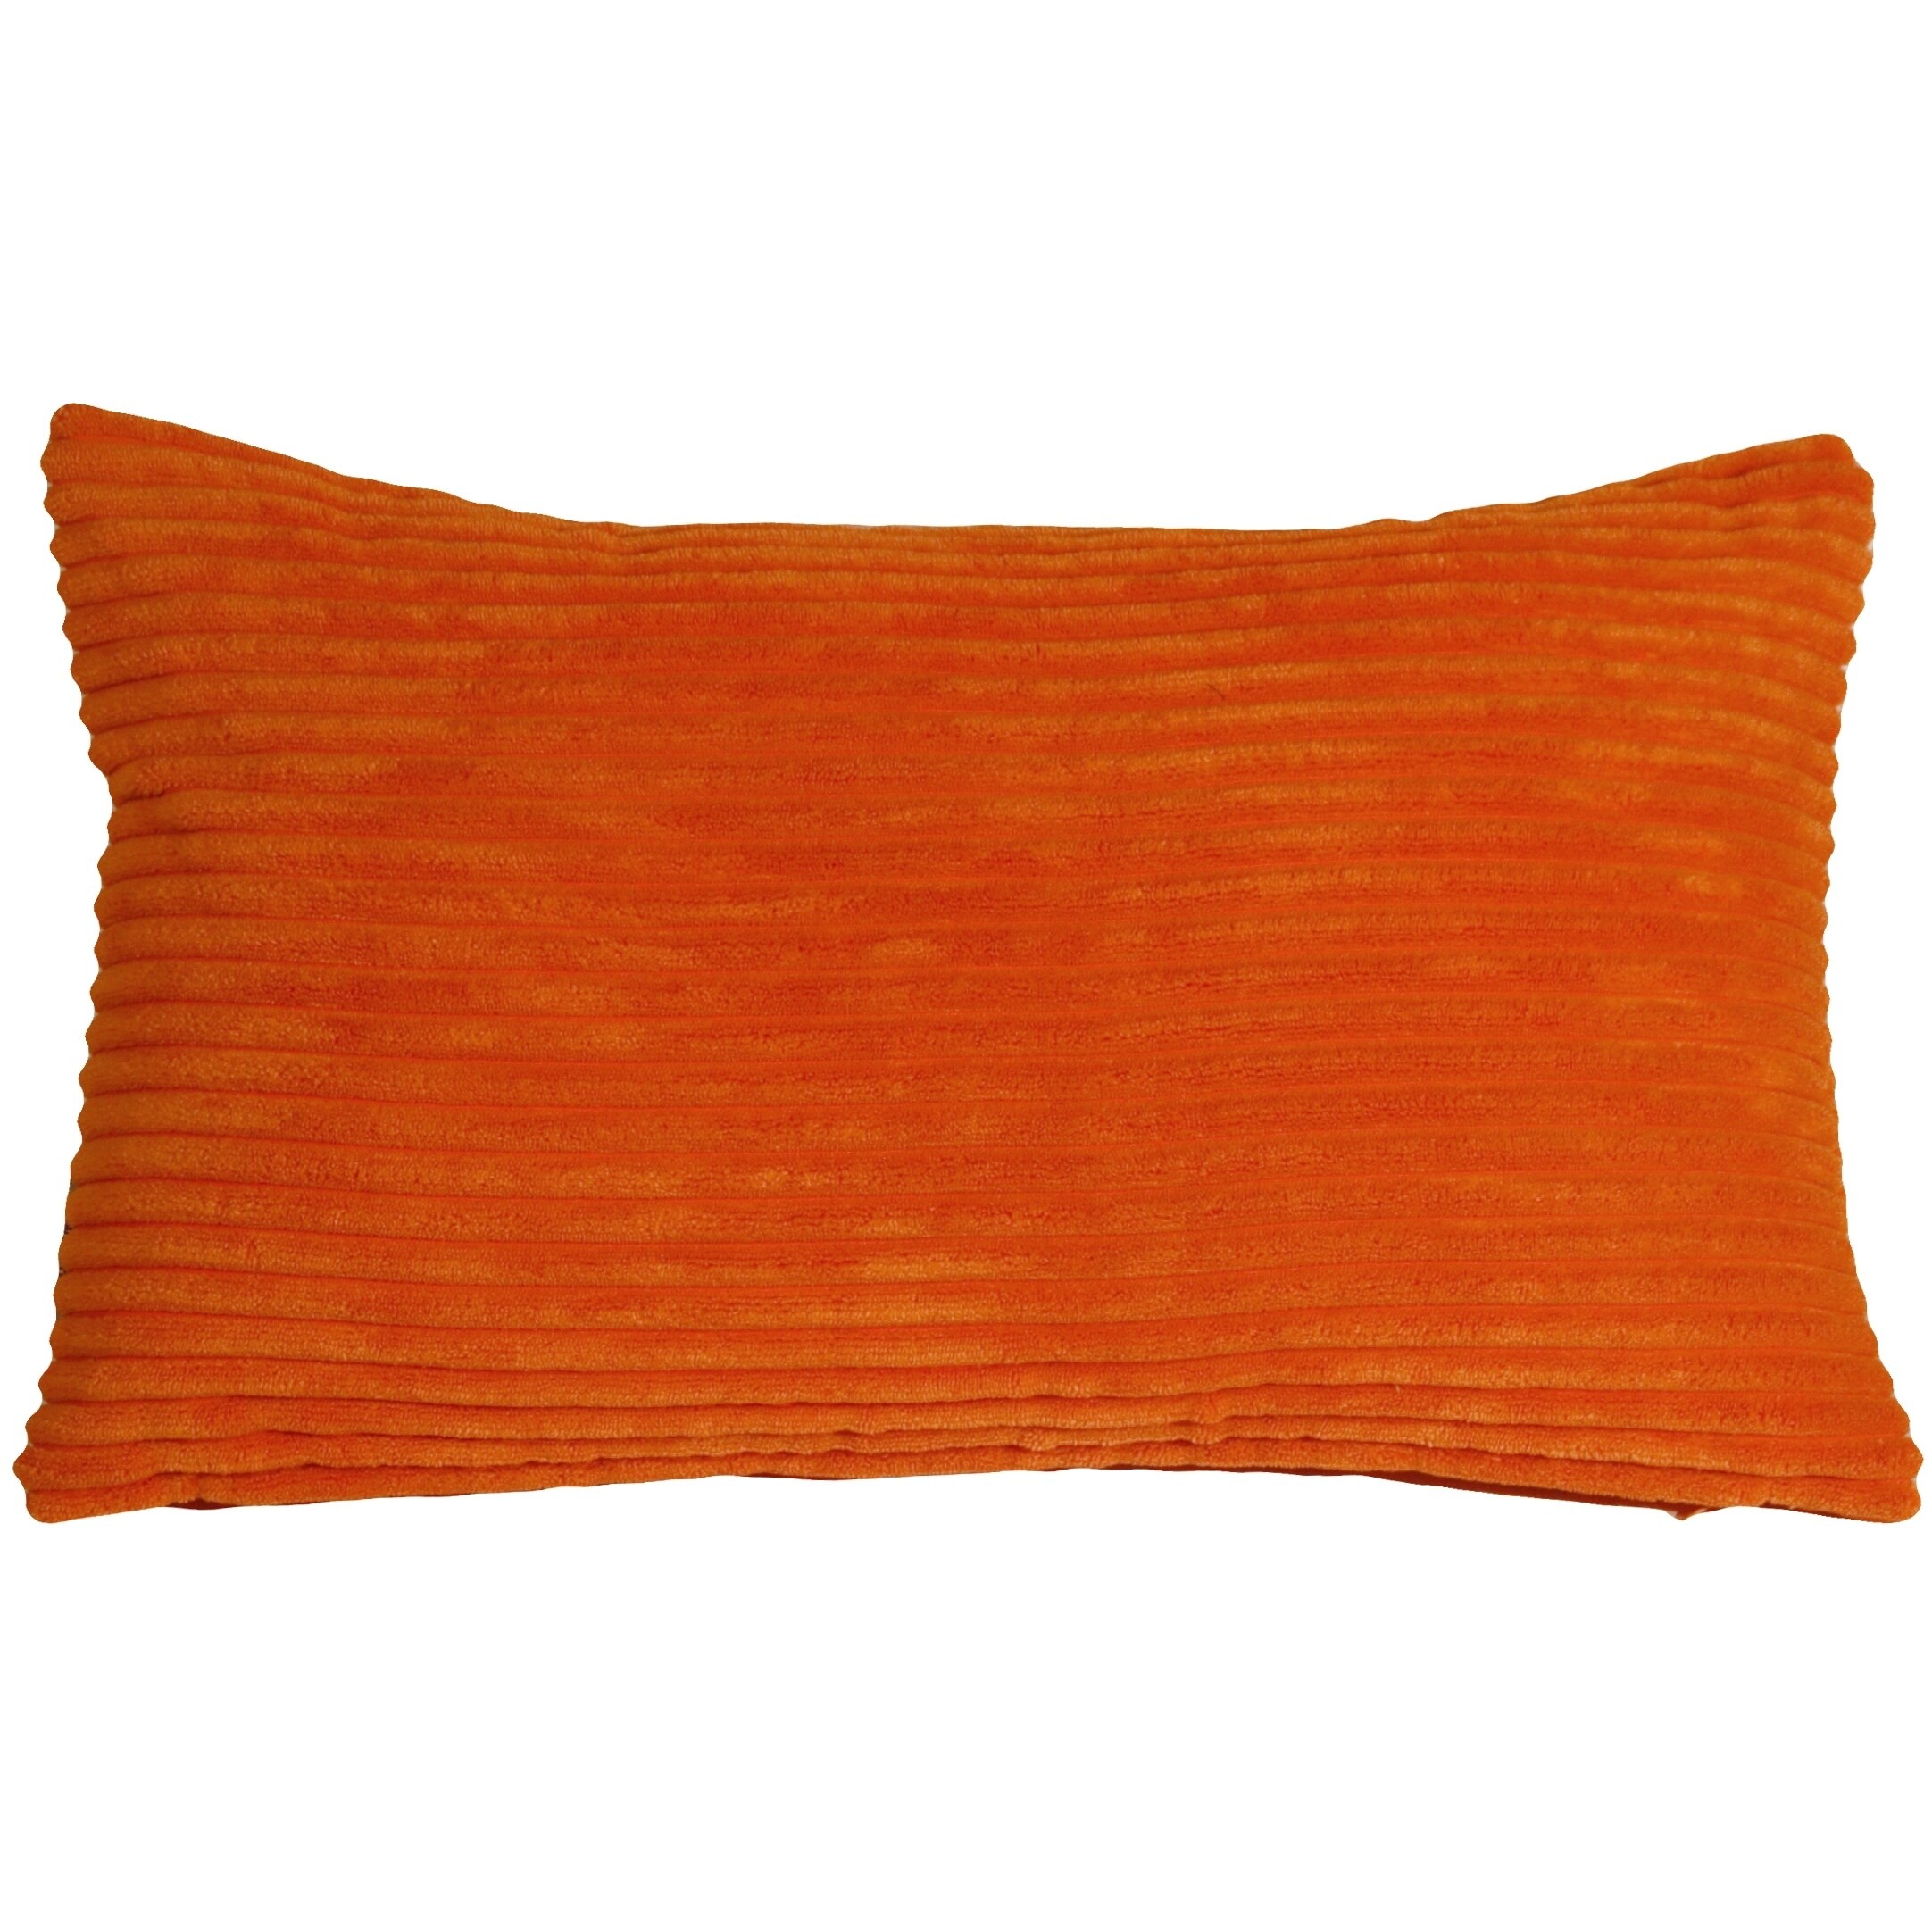 Wide Wale Corduroy Light Orange 22x22 Throw Pillow Pillow Decor